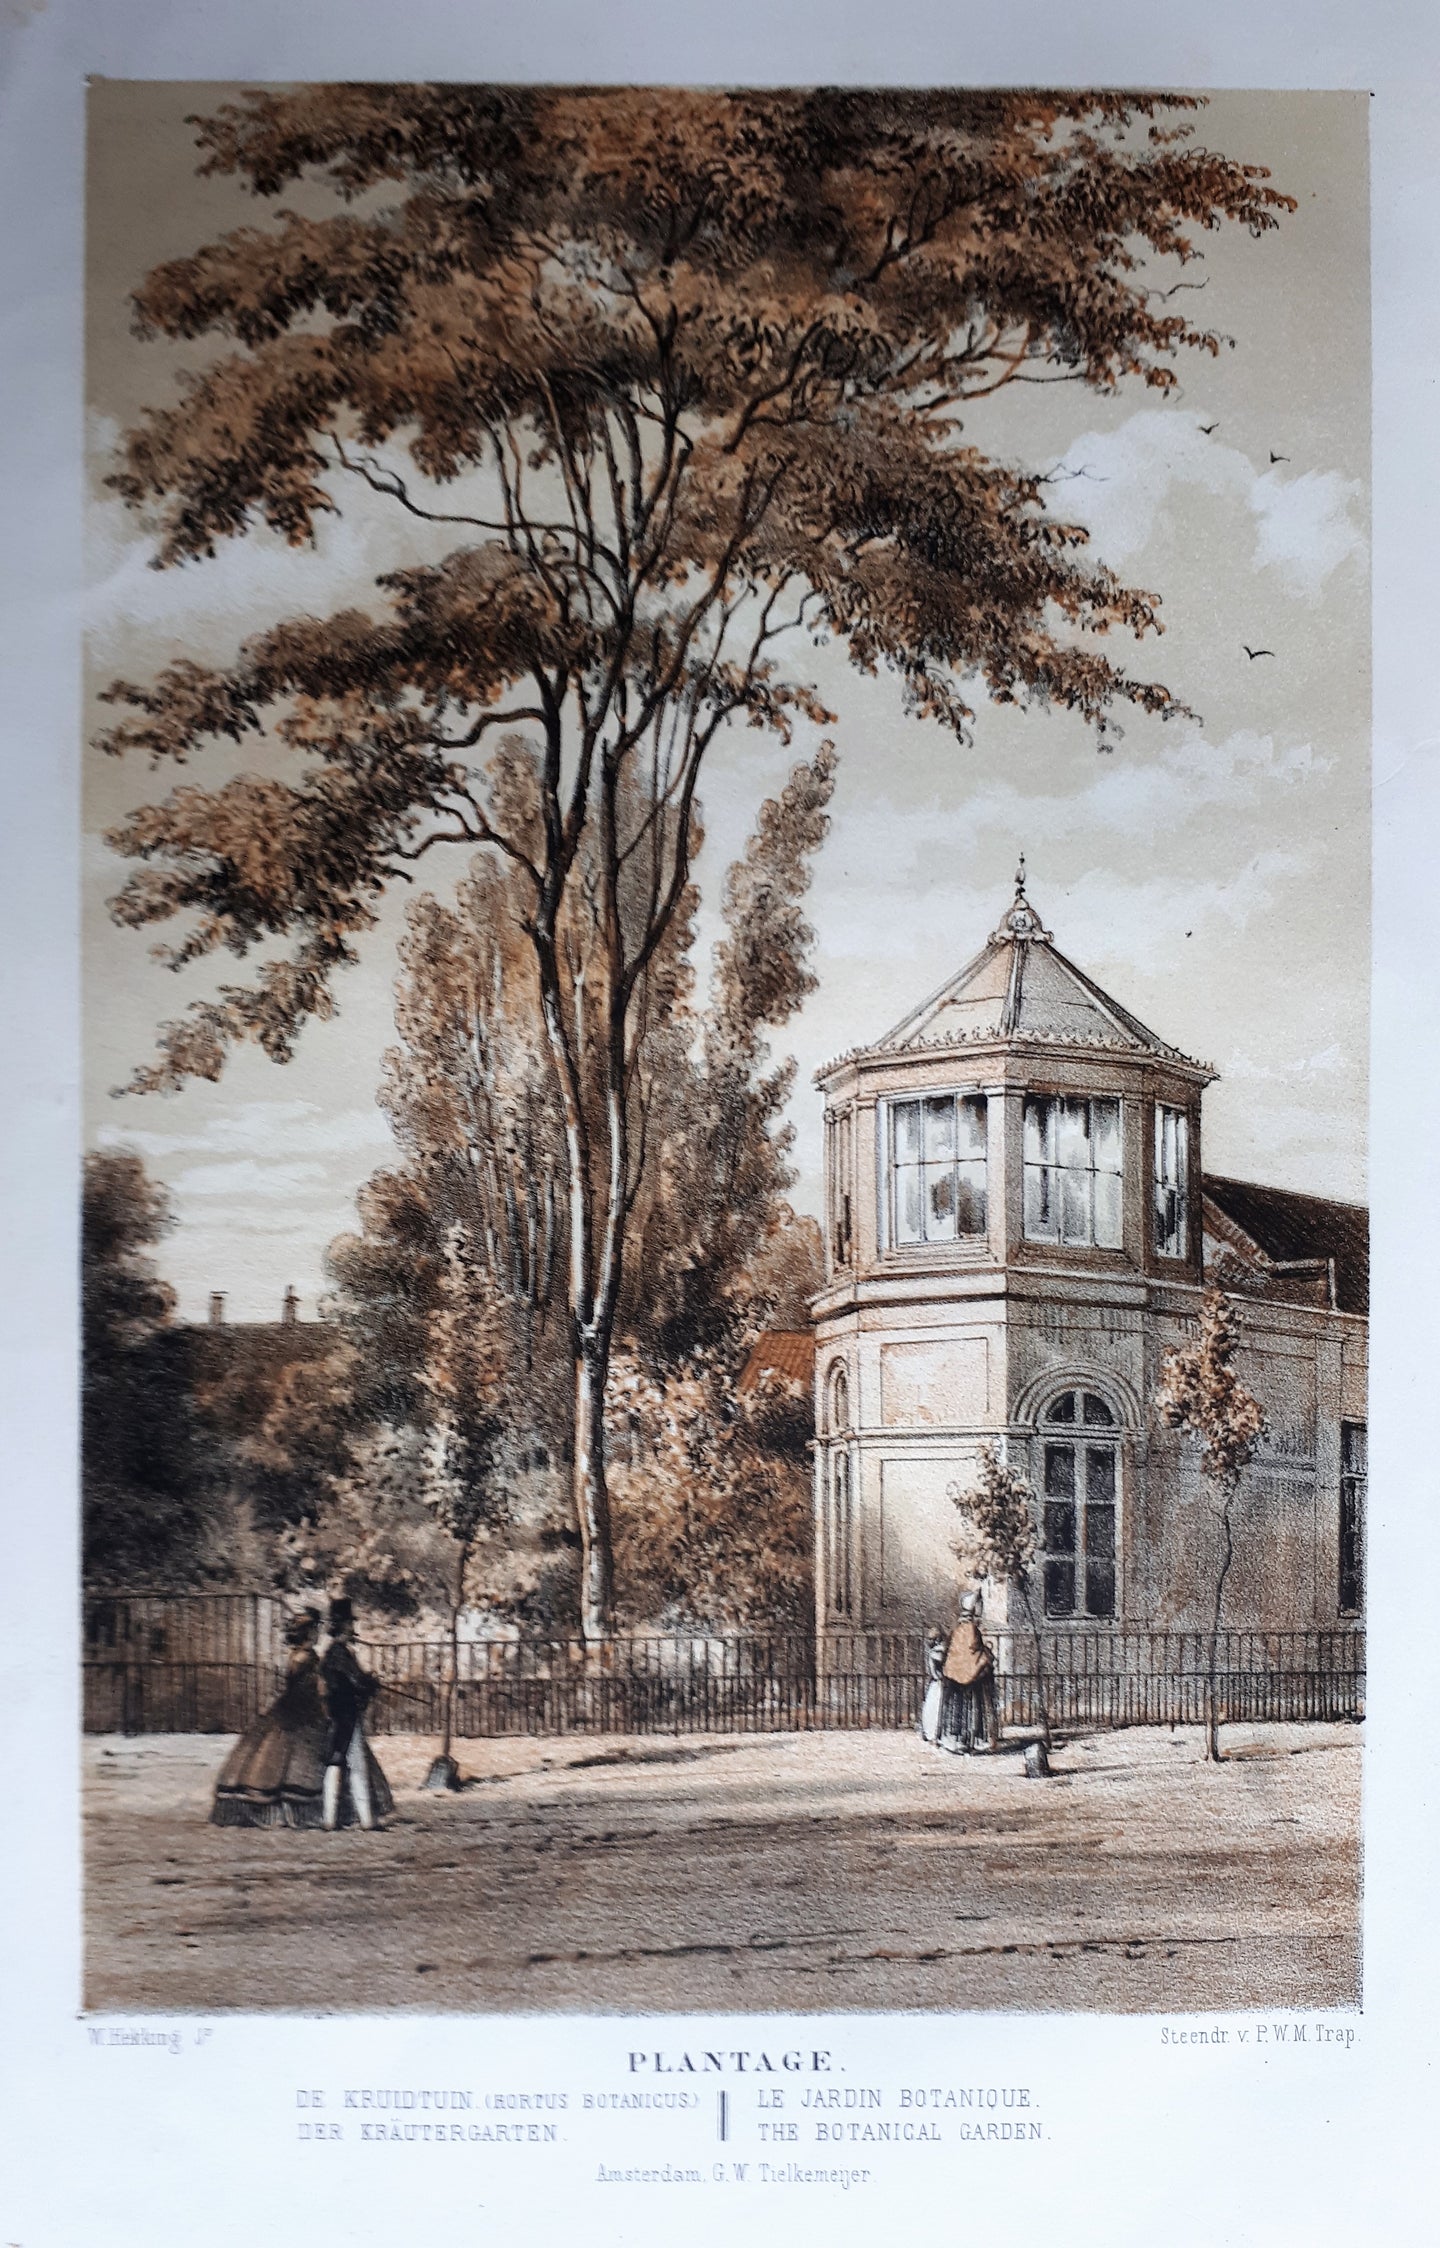 Amsterdam Hortus Botanicus - W Hekking jr/ GW Tielkemeijer - 1861